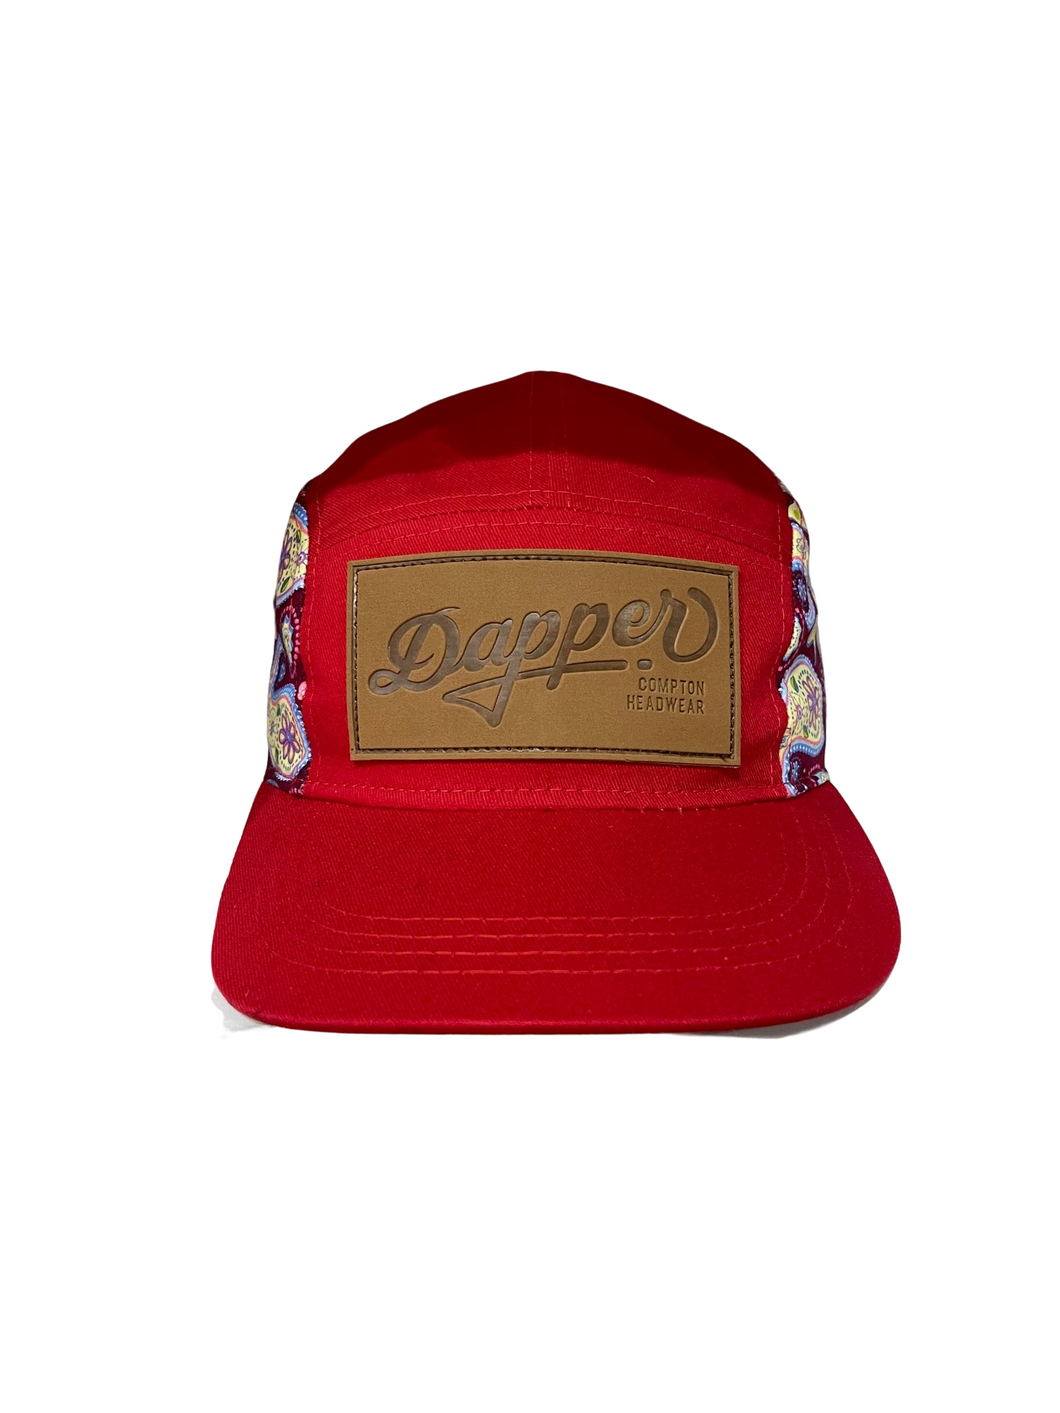 The Red Dapper Paisley Cap